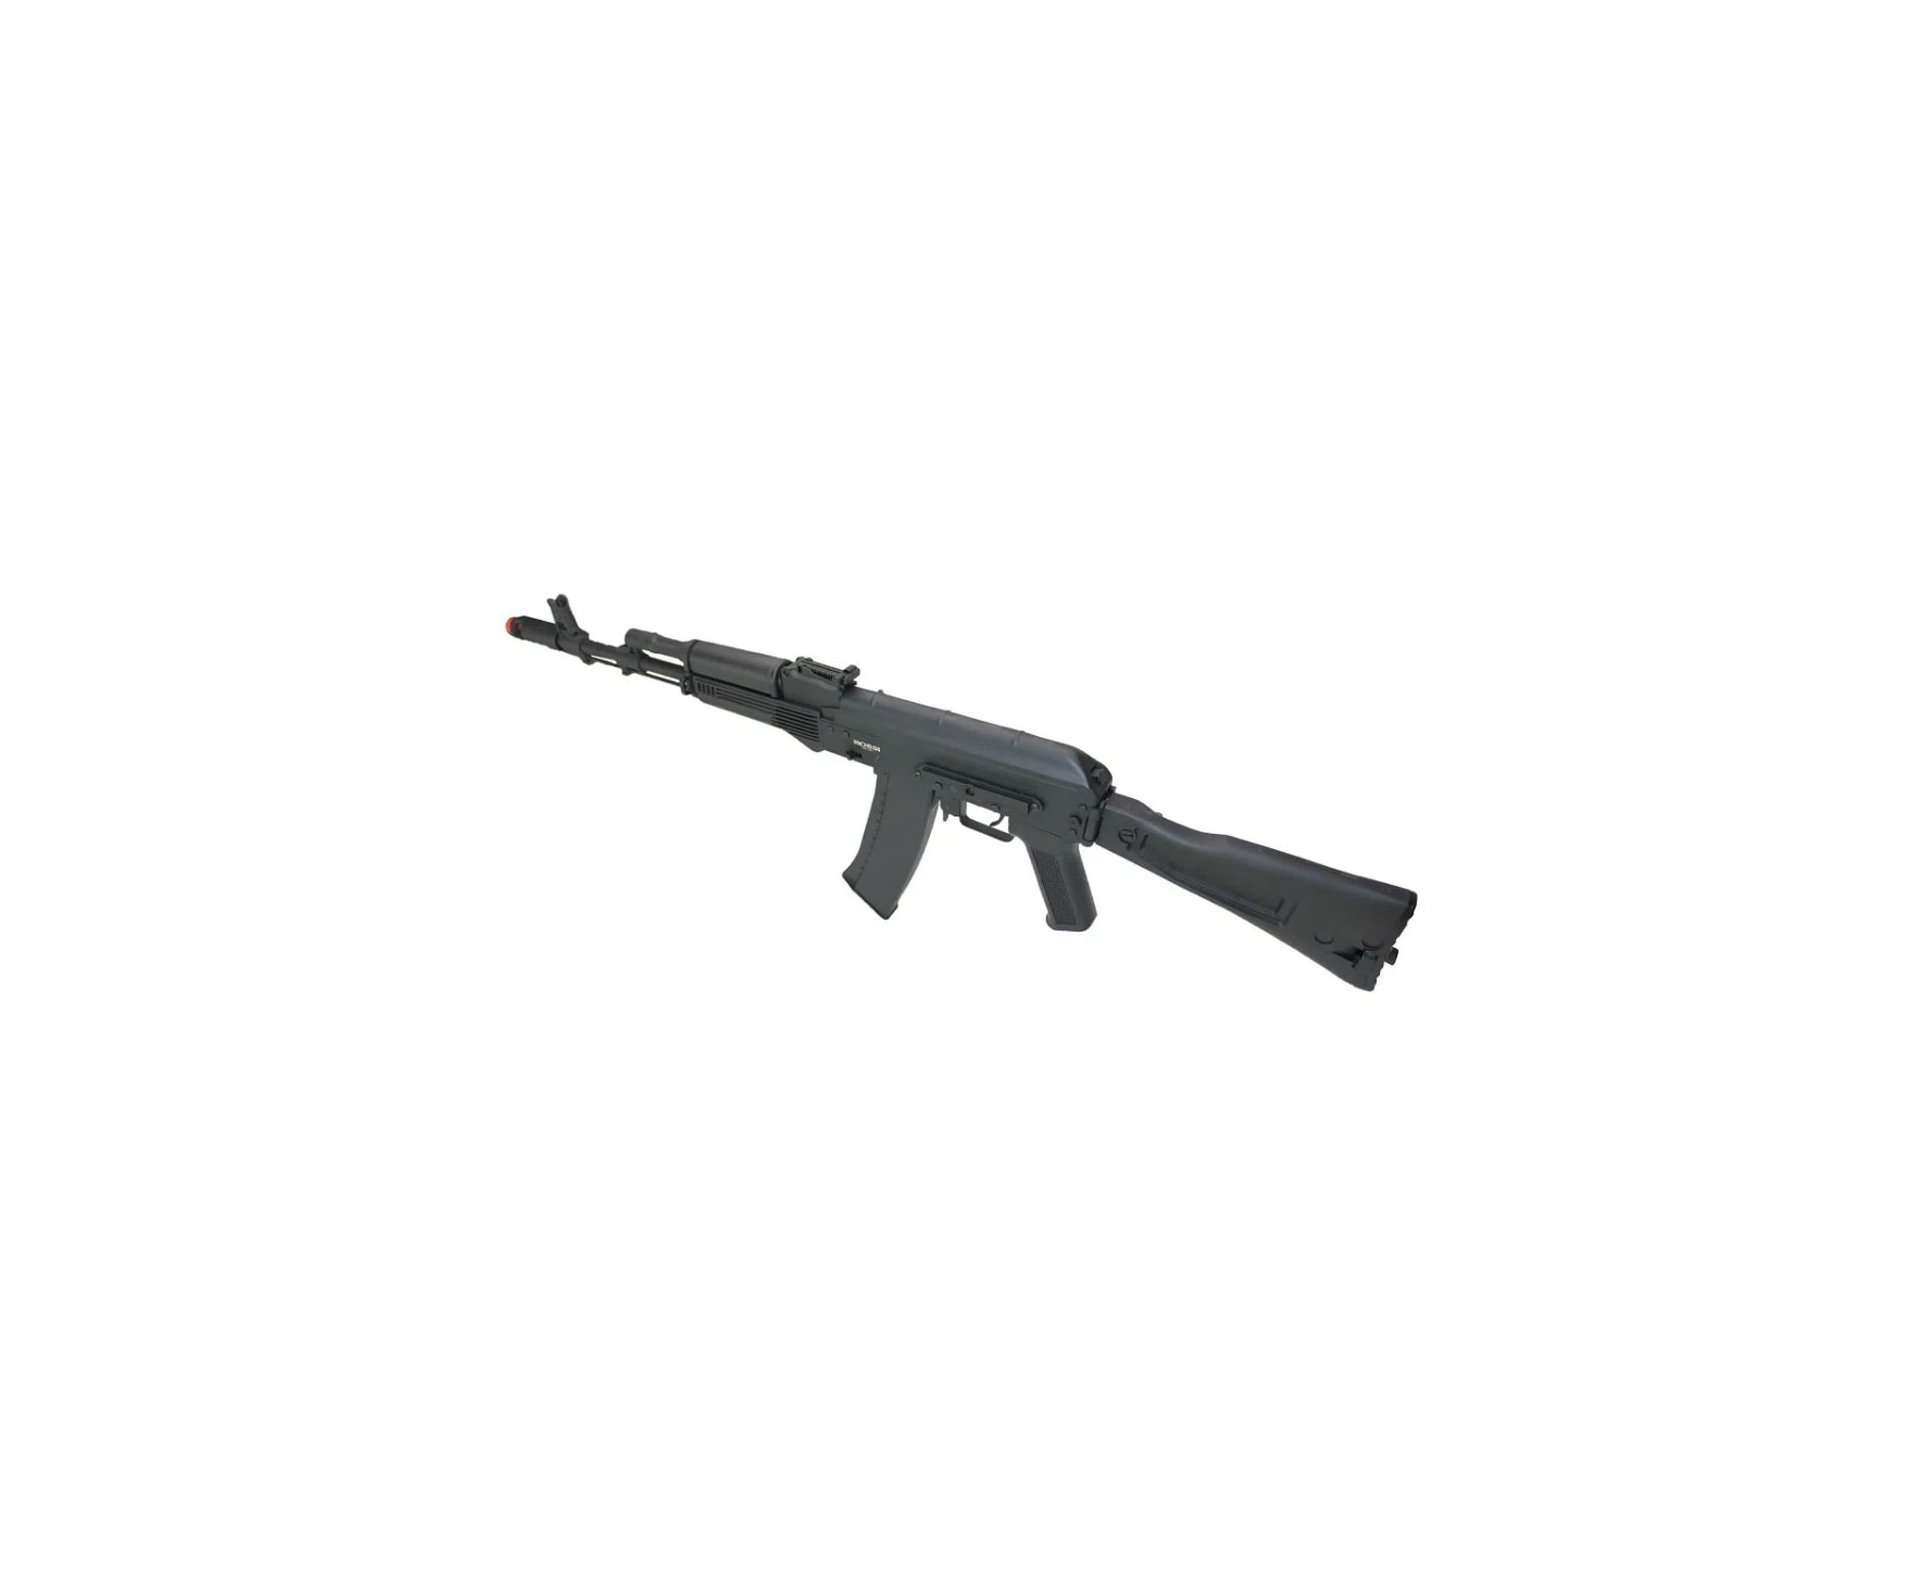 Rifle de Airsoft Neptune AK74 mosfet Full Metal 6mm - Rossi + Bateria + Carregador + BBs + Óleo de silicone+Alvos